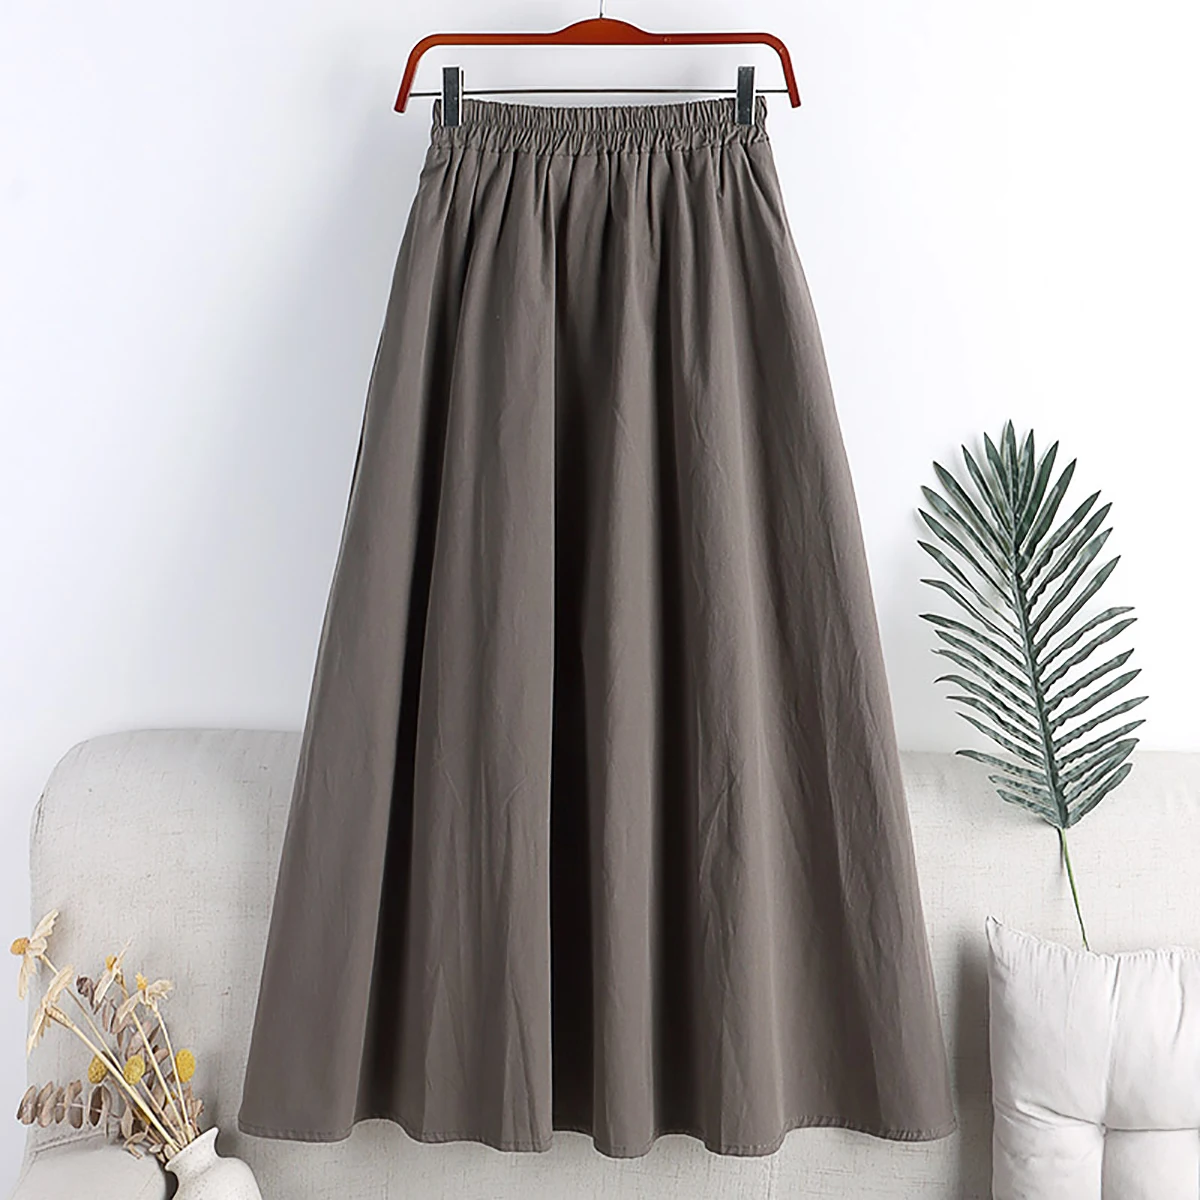 2022 New Summer Fashion Women's Elastic High Waist Gradient Ramp Pleated Skirt Thin Waist Umbrella Long Pleated Midi Skirt enlarge